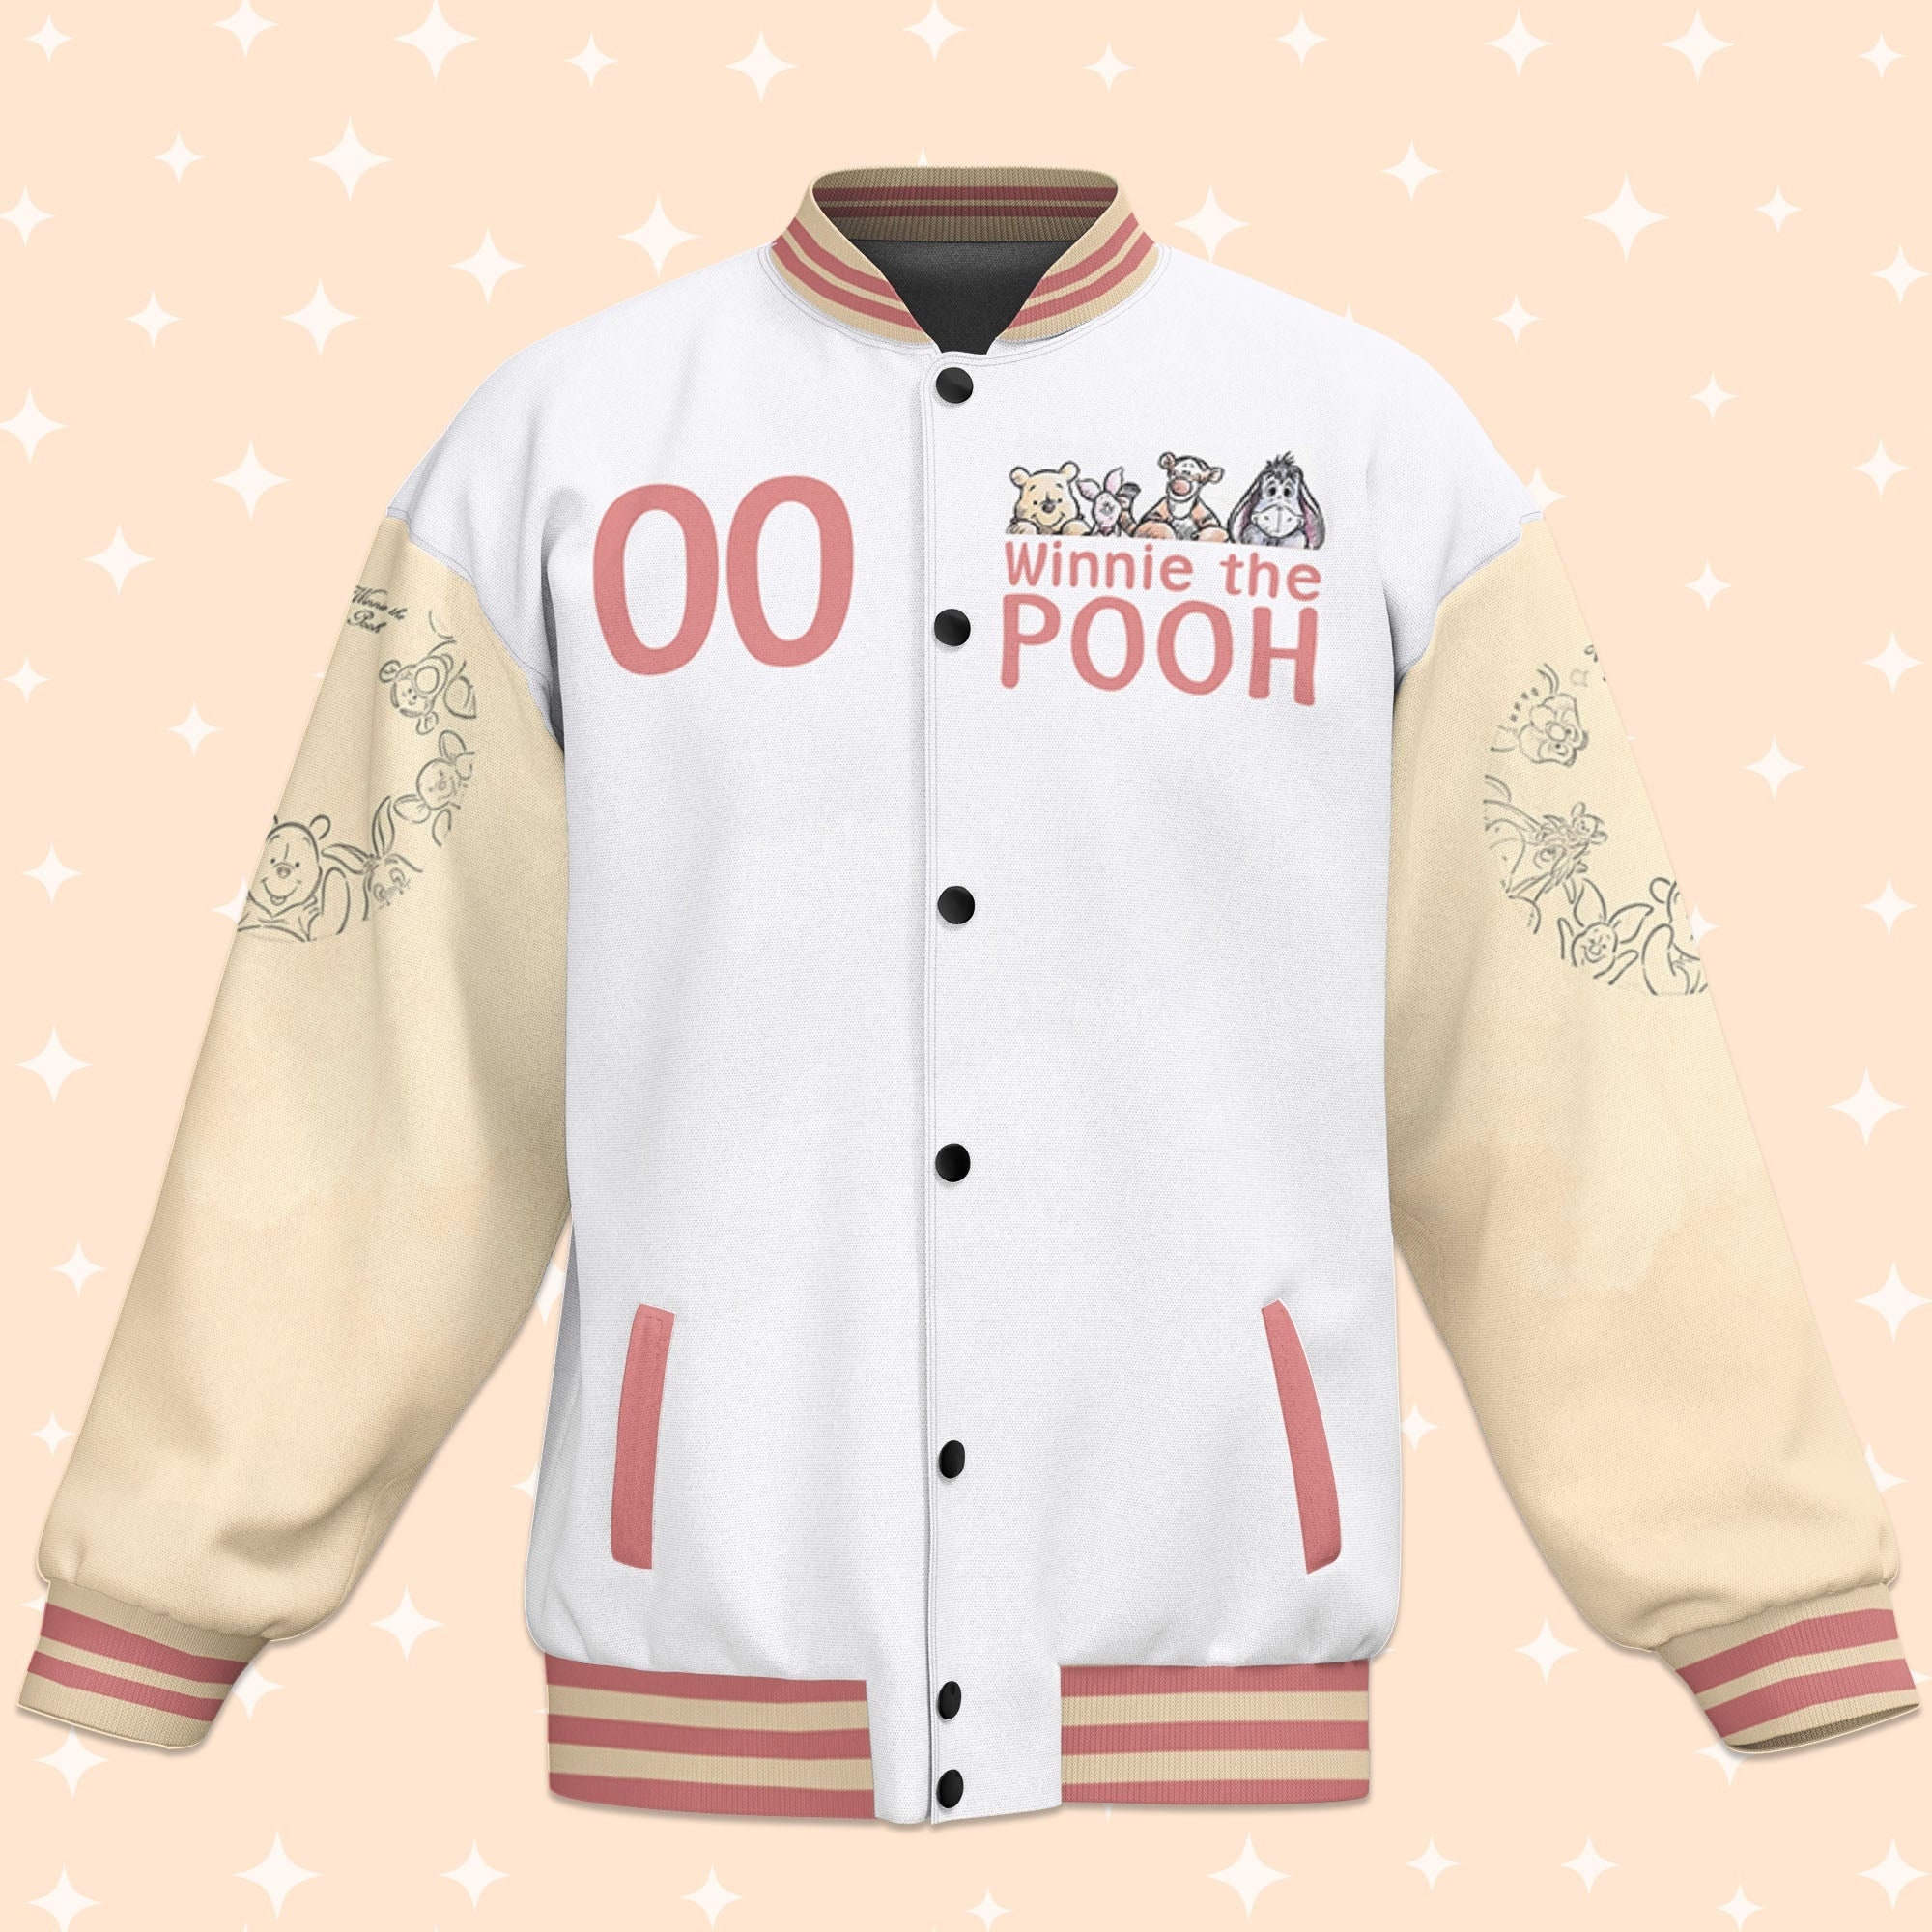 Custom Team Winnie the Pooh White Baseball Jackets, Baseball Team Outfit